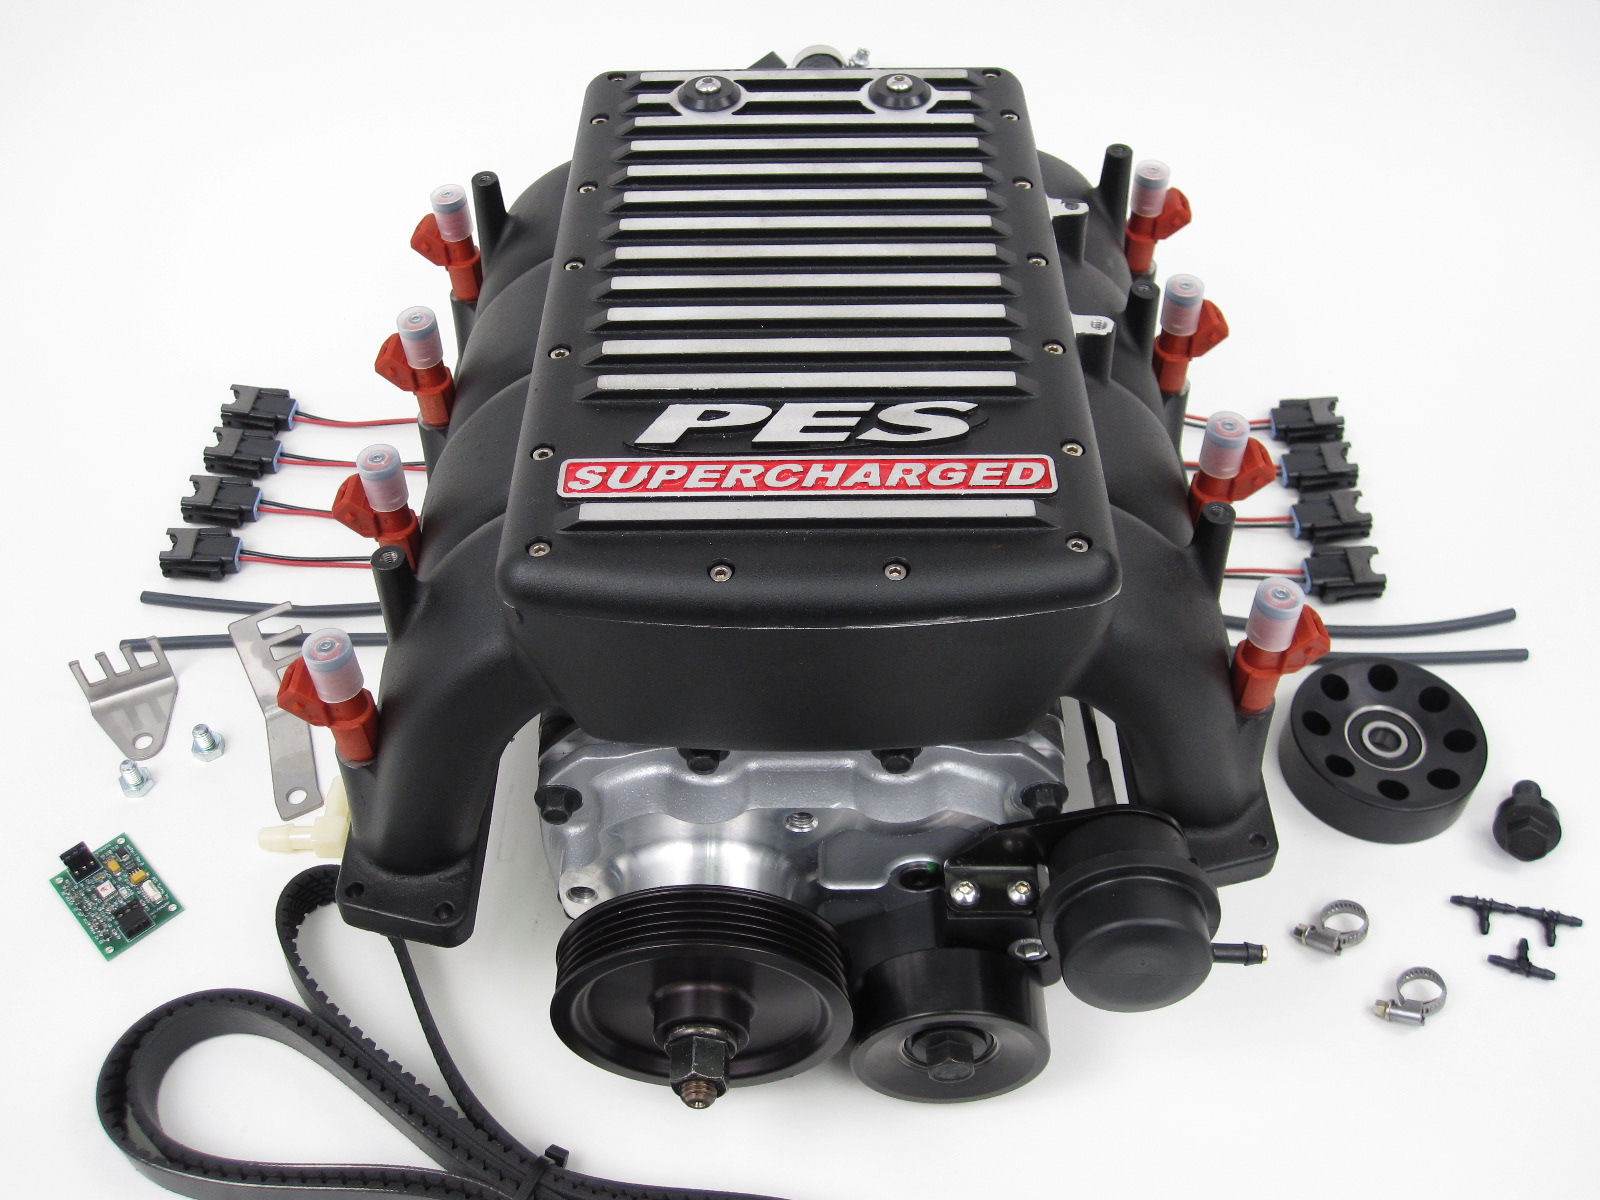 Нагнетающий компрессор. Supercharger Audi 2.8. Supercharger Kit Audi 2,8. Audi 2.6 Supercharger. Компрессор PES g2 Supercharger.